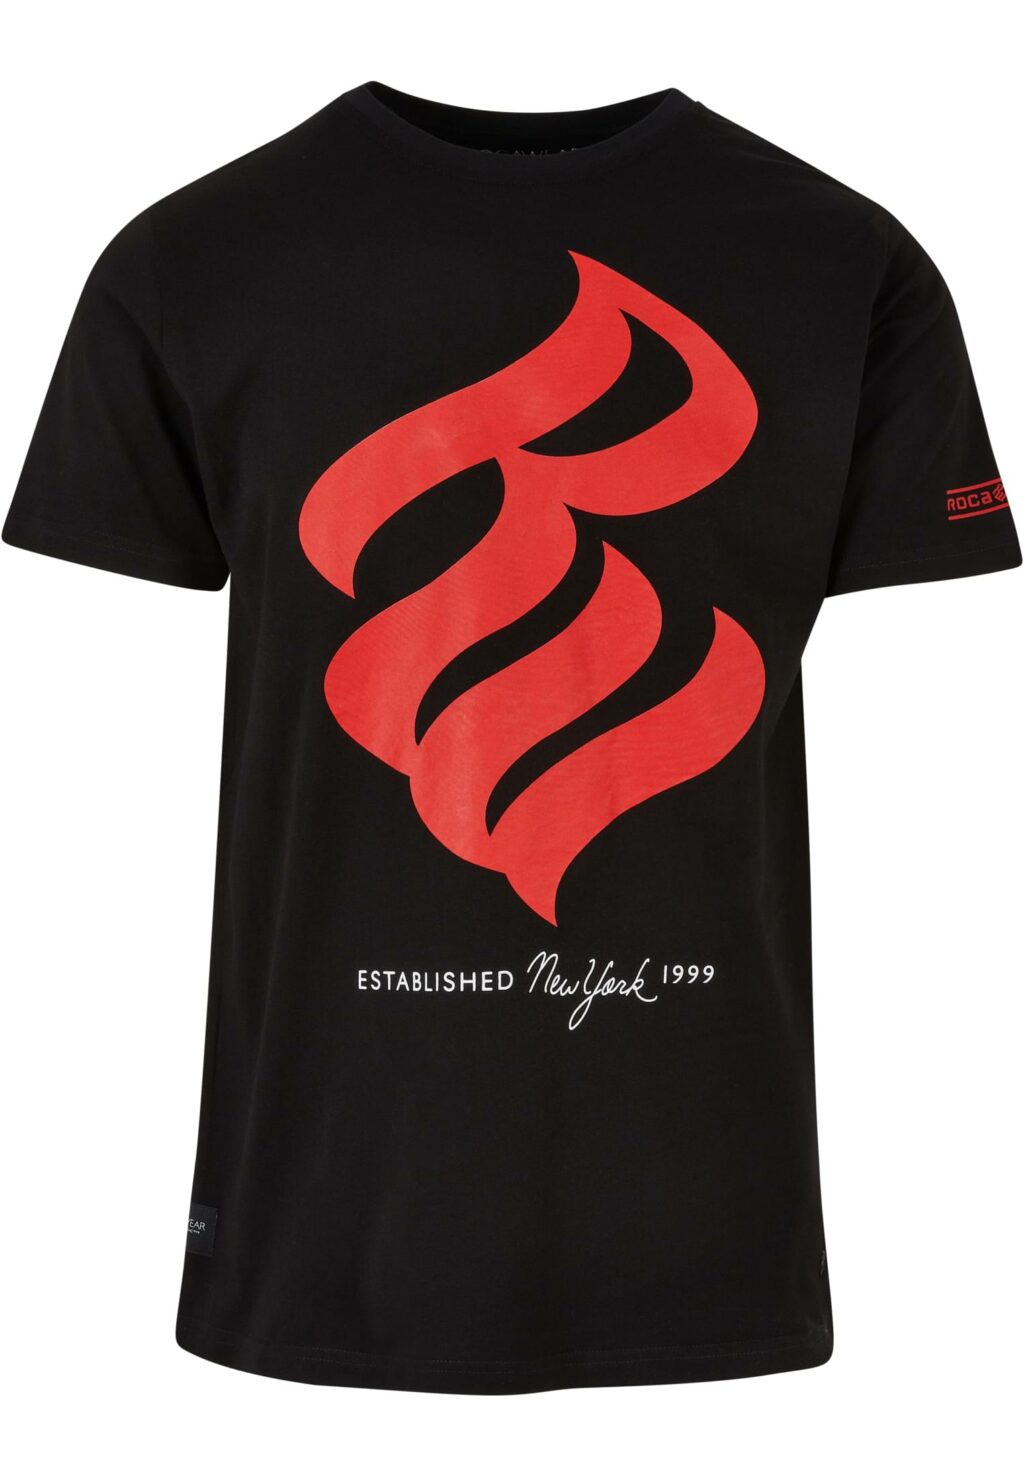 Rocawear T-Shirt black/red RWTS024